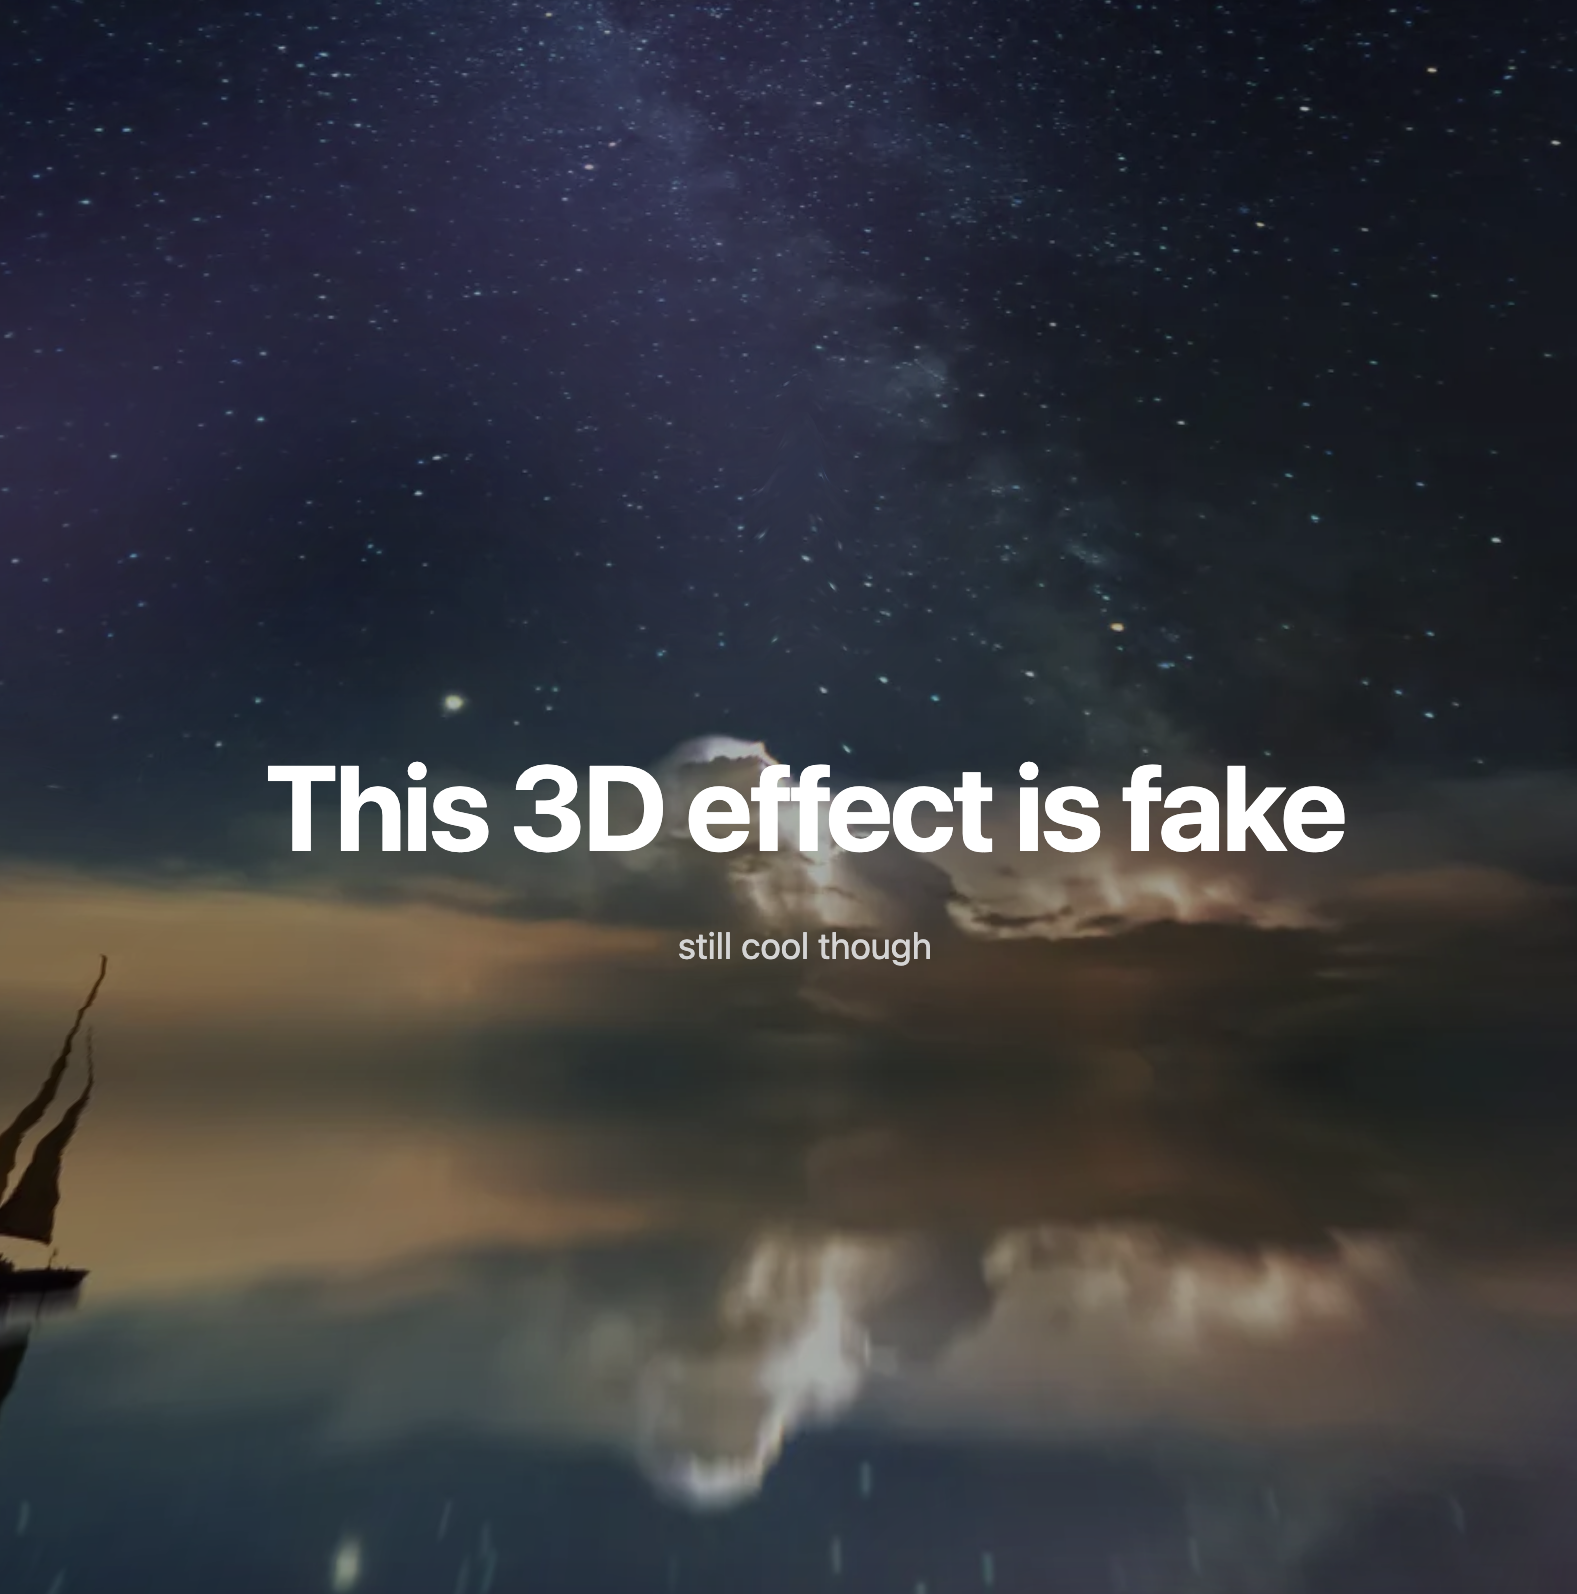 Fake 3D effect